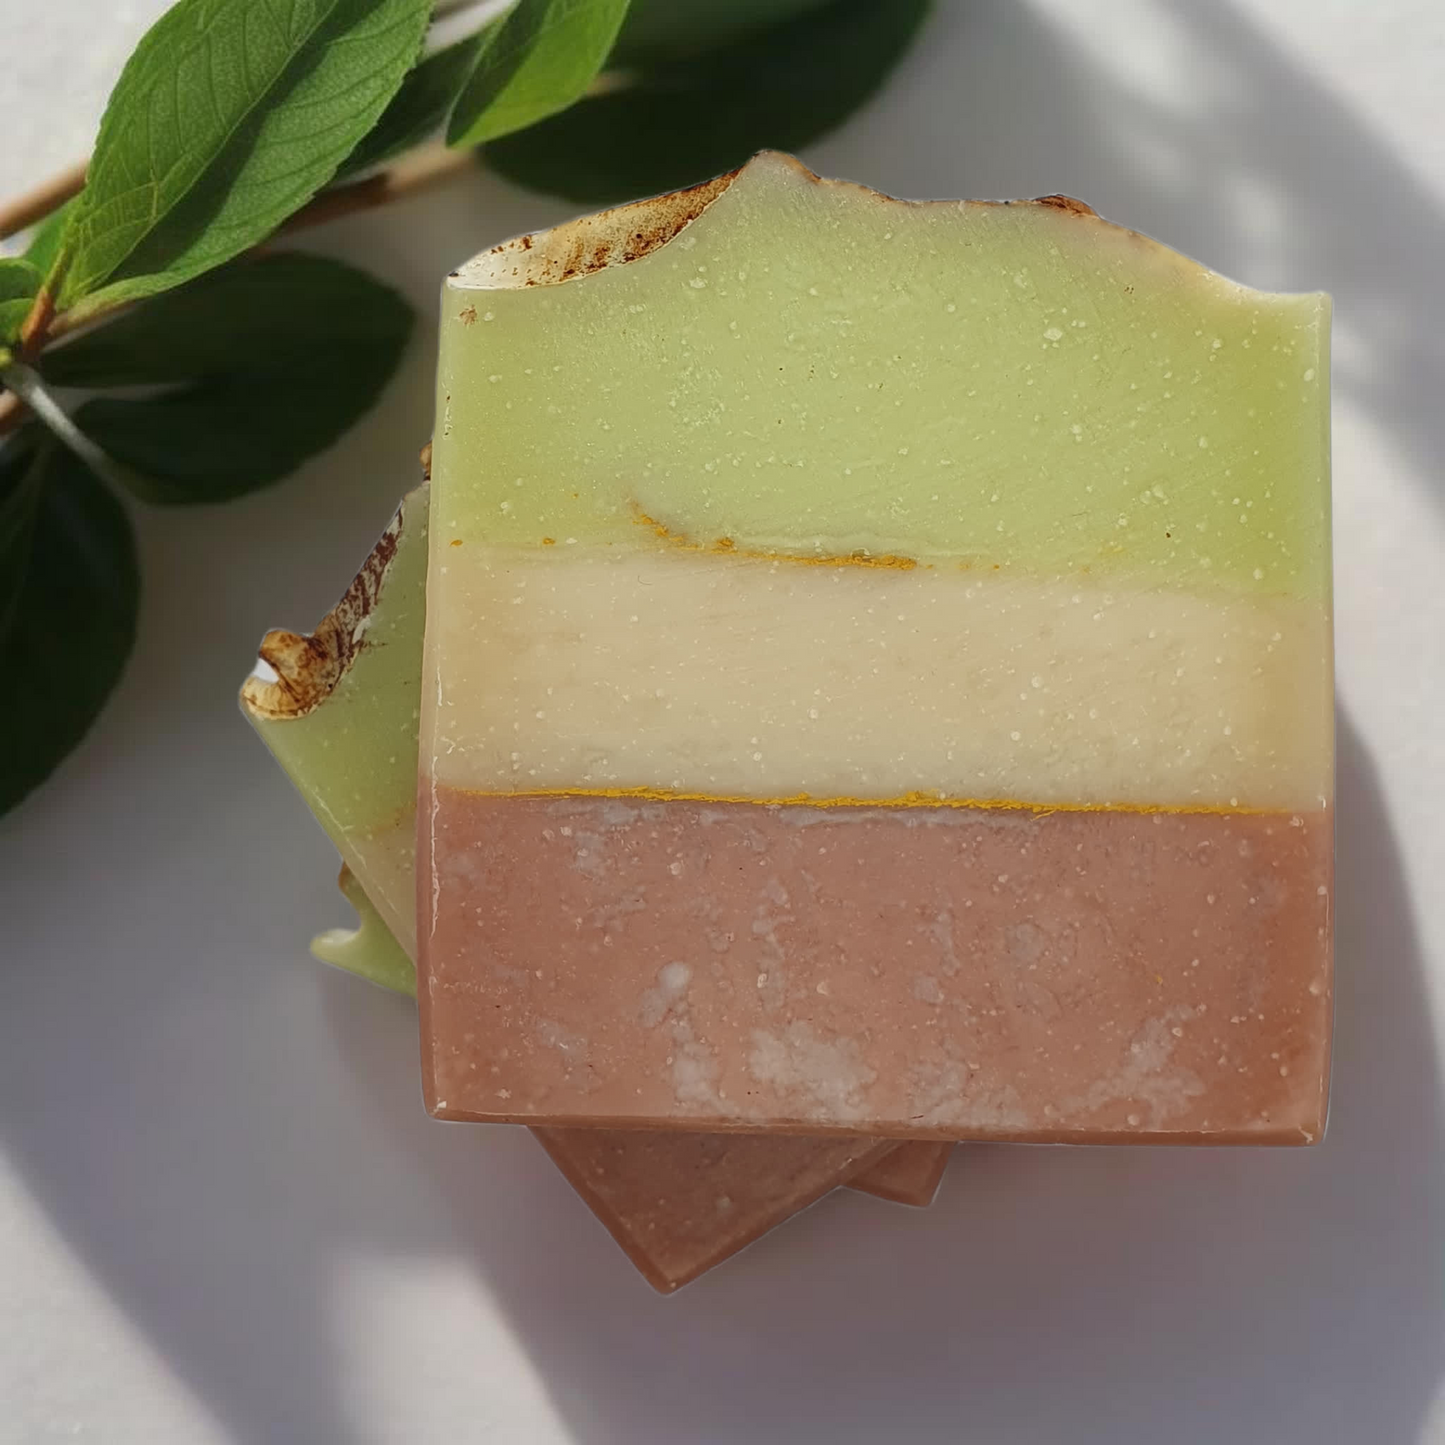 Dark Chocolate & Mint - Natural Aromatic Soap